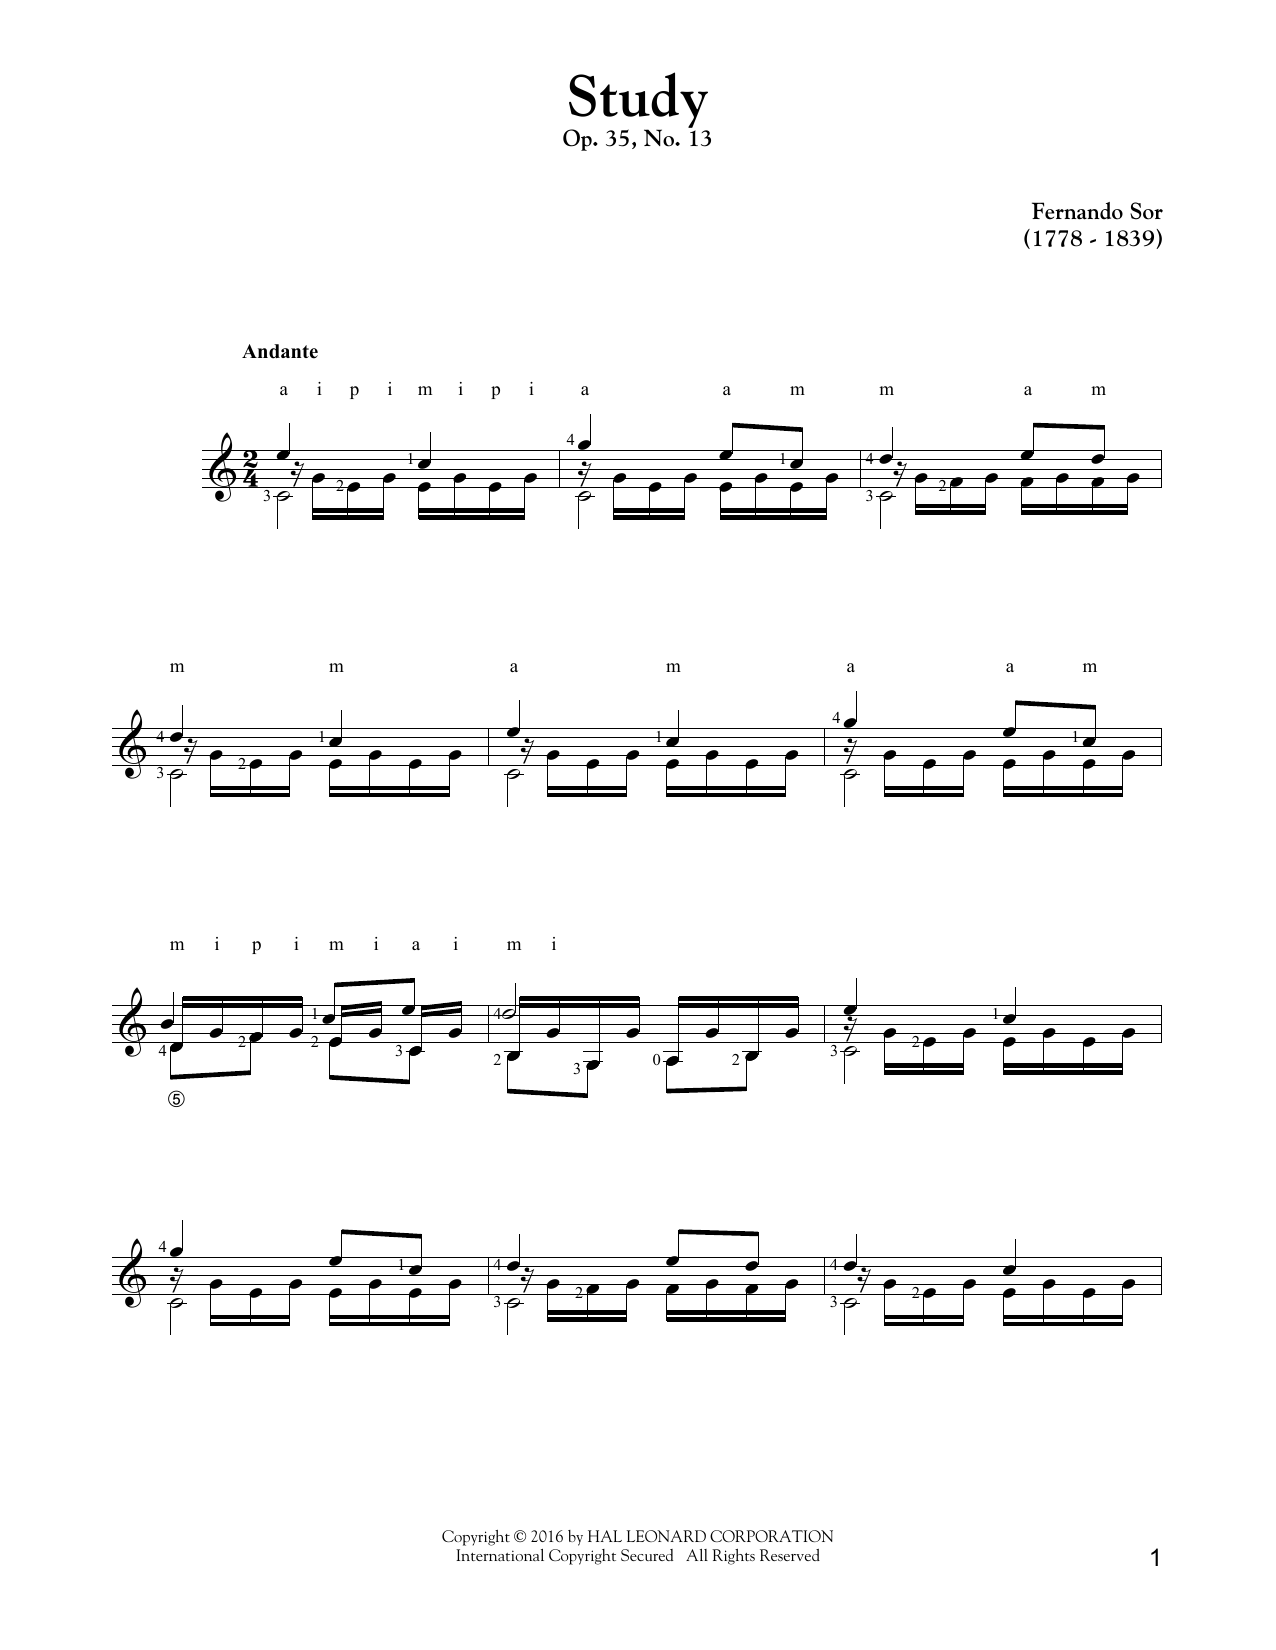 Download Fernando Sor Study Op. 35, No. 13 Sheet Music